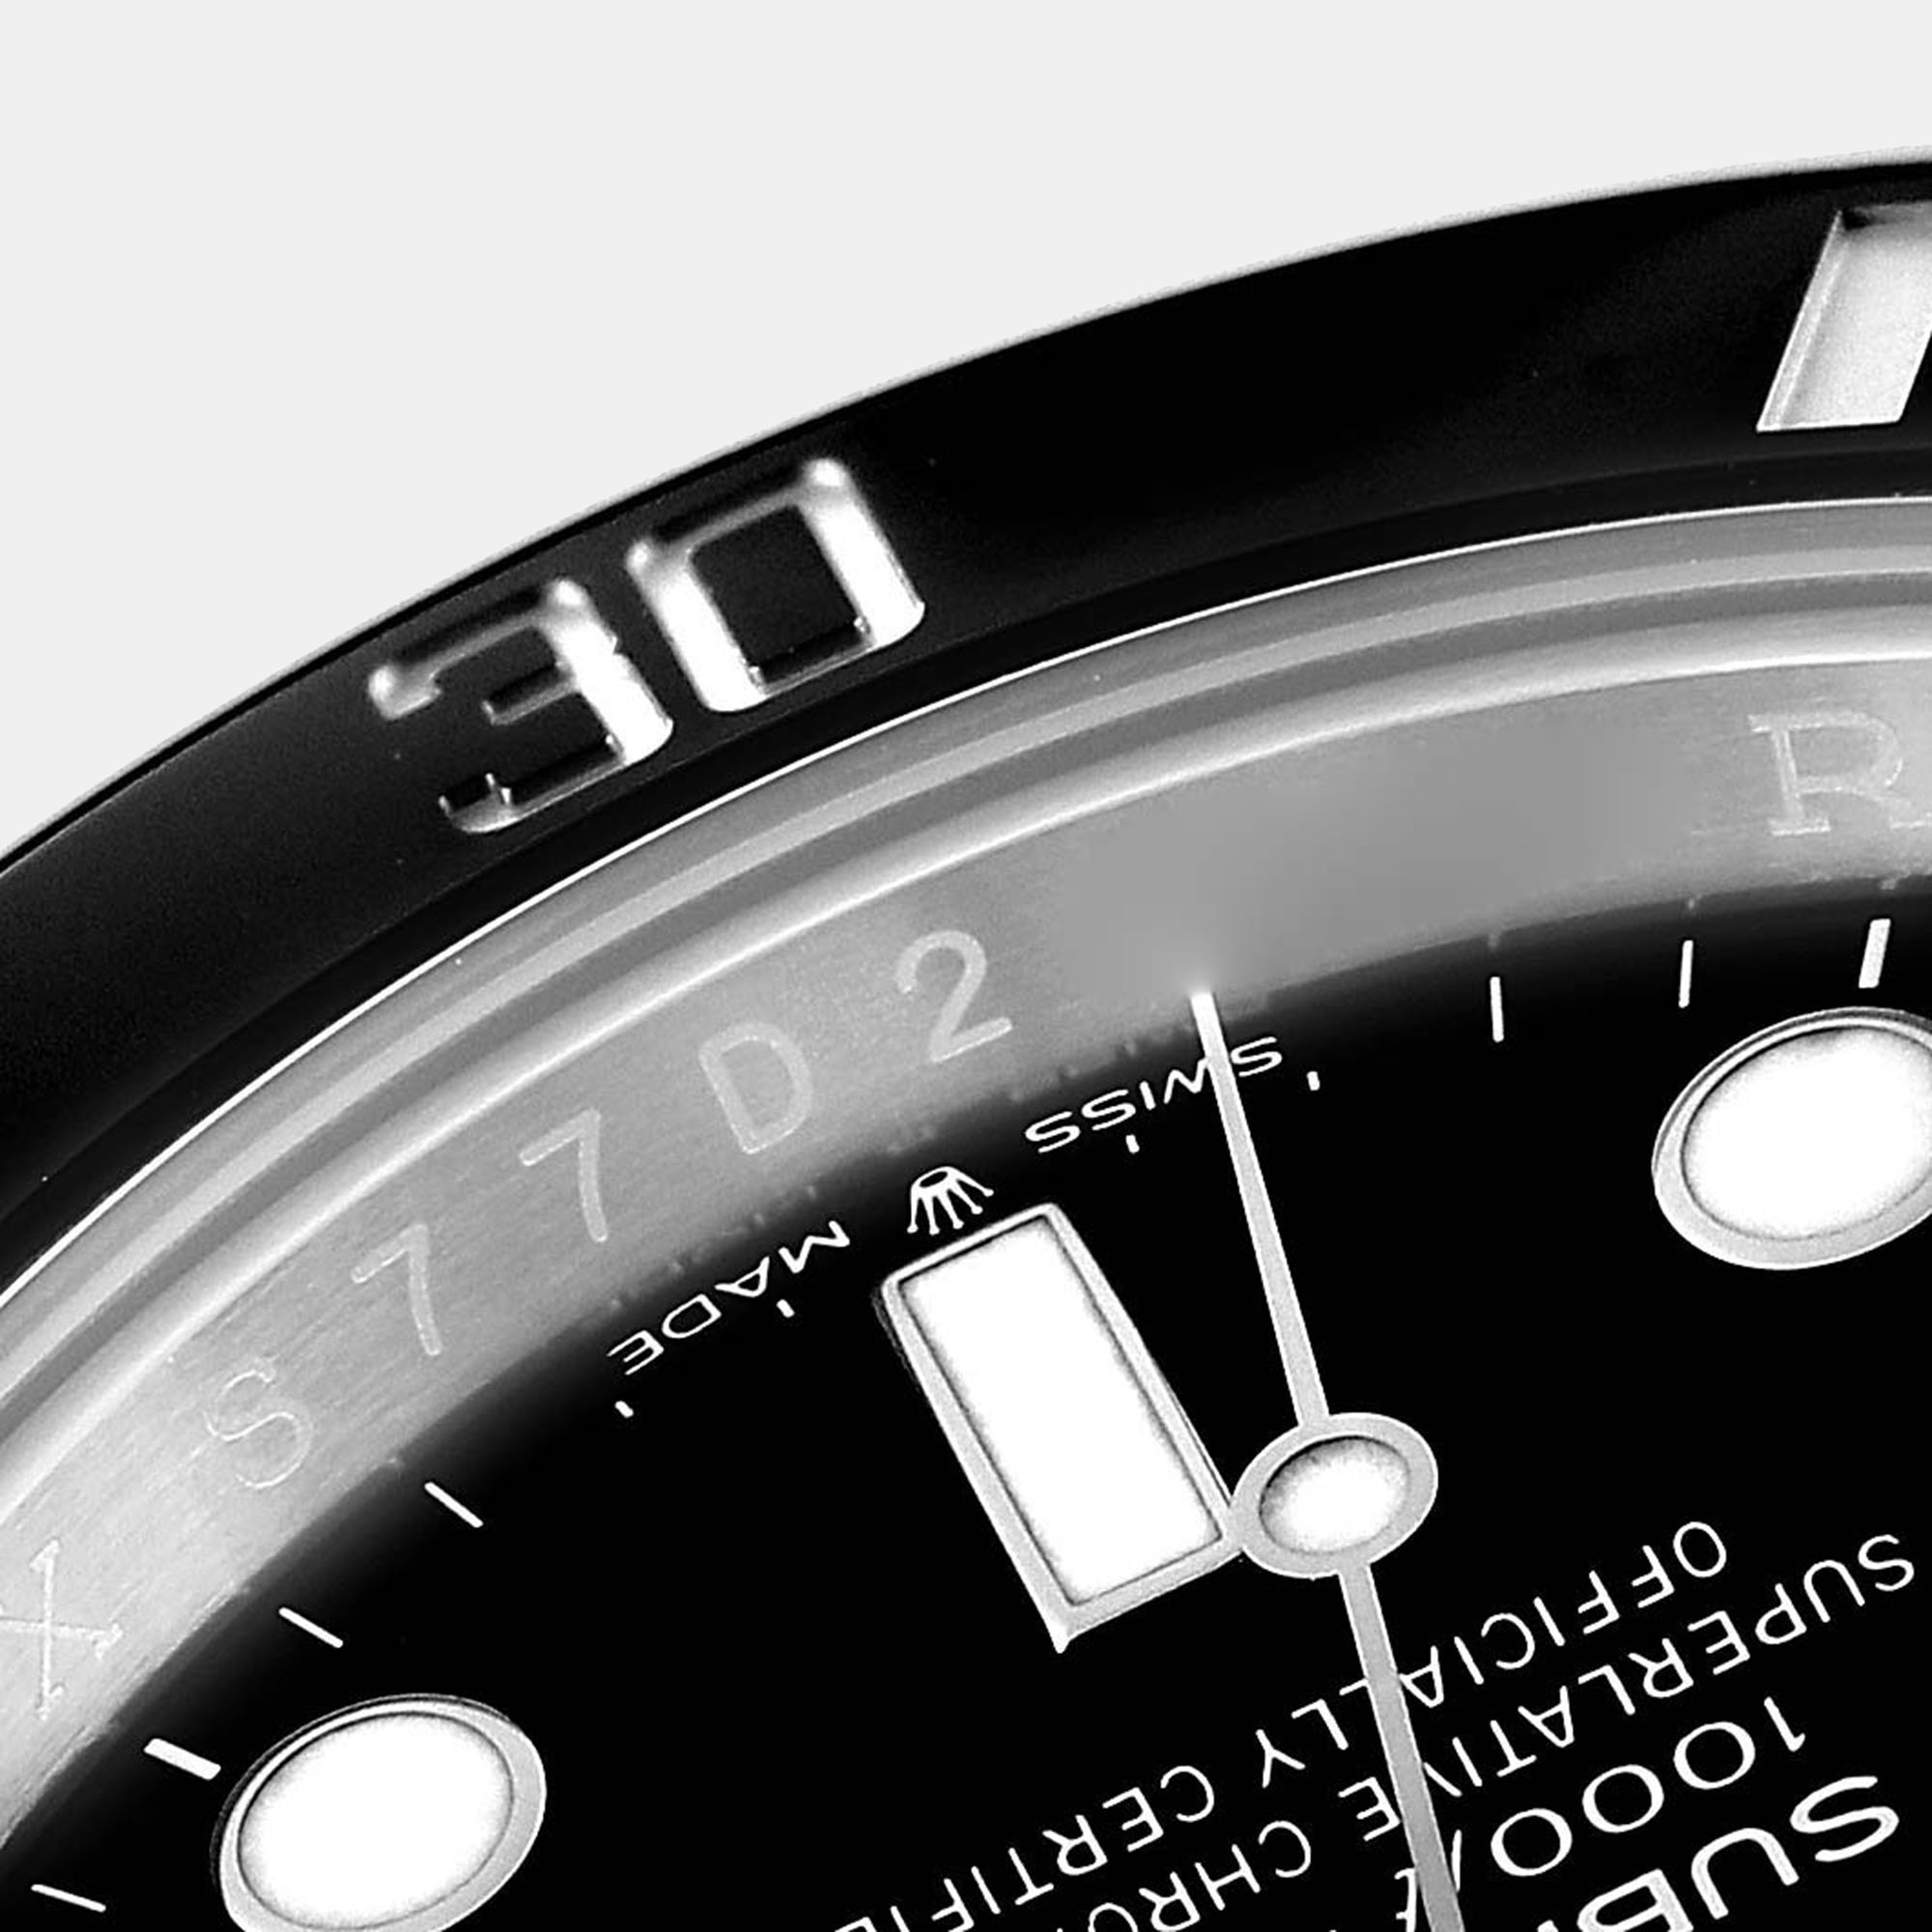 Rolex Submariner Non-Date 4 Liner Ceramic Bezel Steel Mens Watch 124060 41 Mm